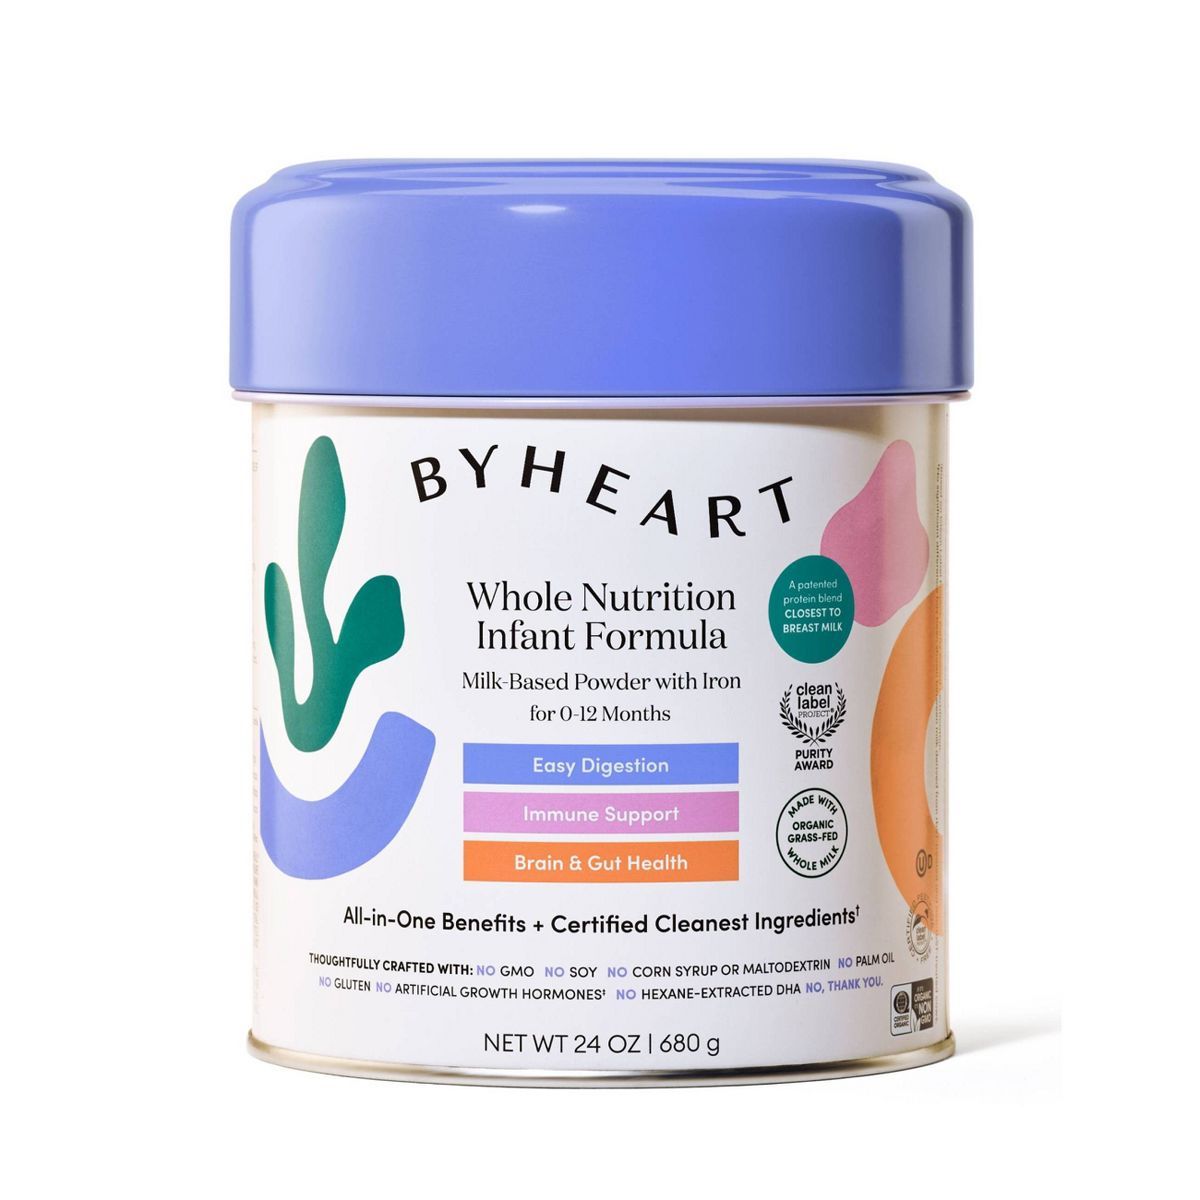 ByHeart Whole Nutrition Powder Infant Formula - 24oz | Target